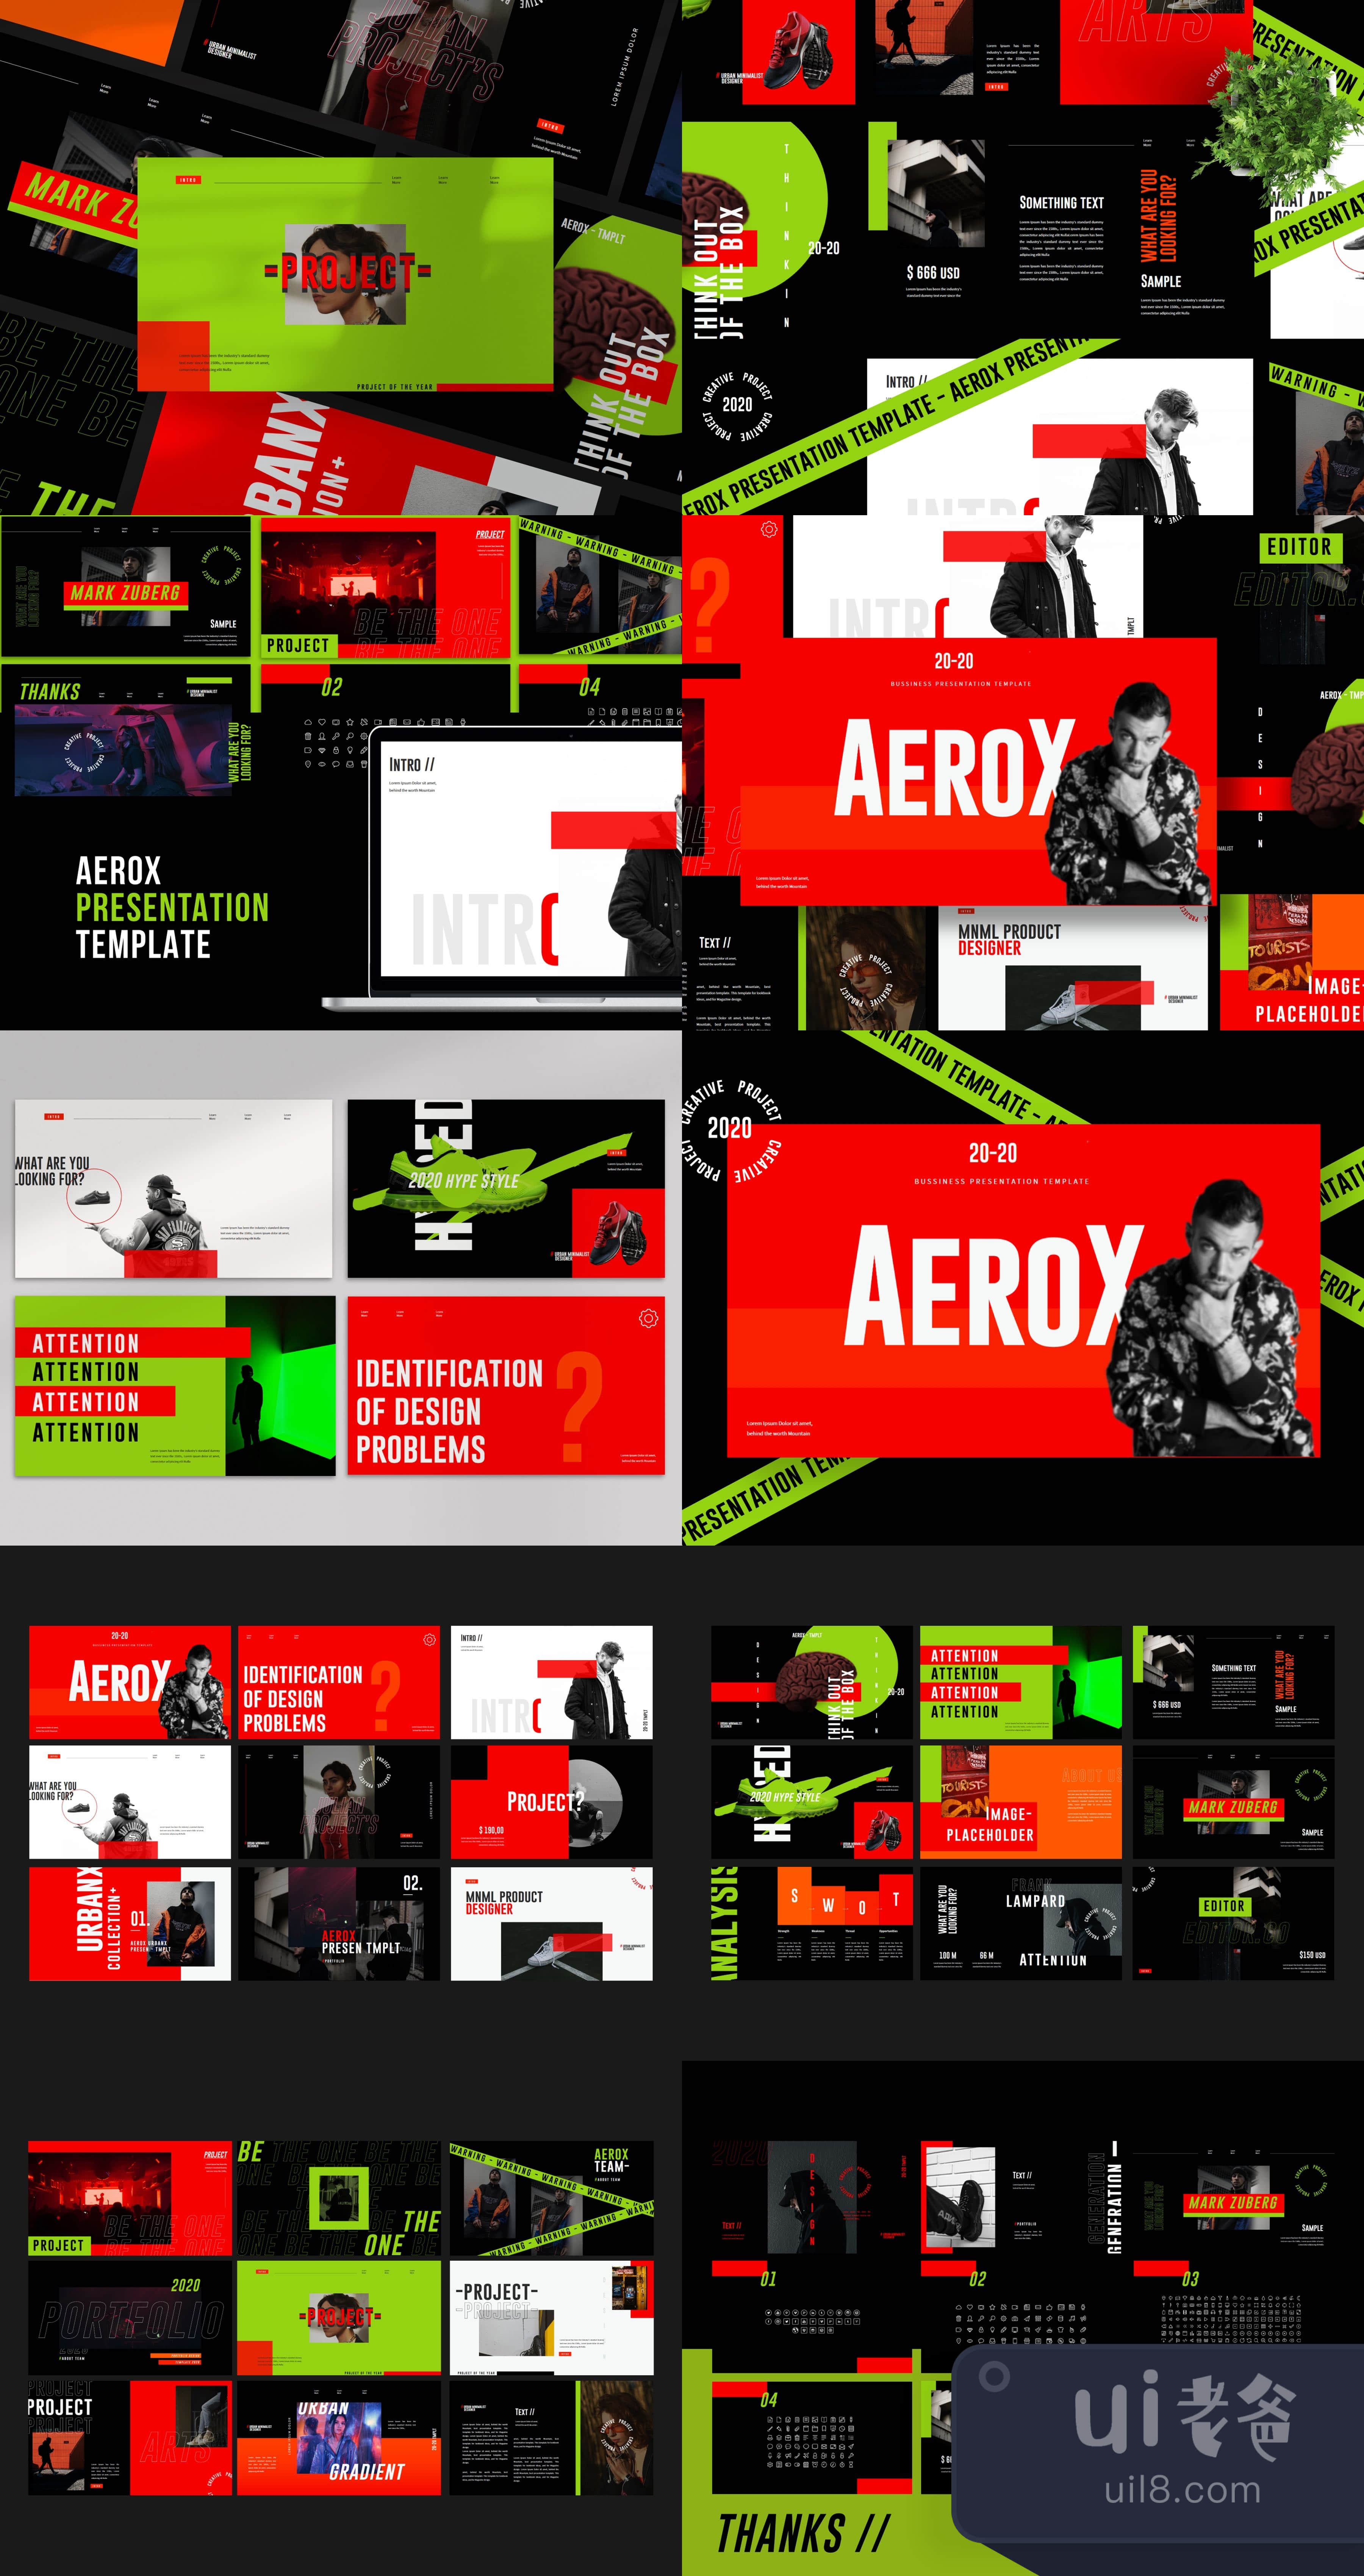 Aerox - PowerPoint模板 (Aerox - PowerPoint Template)插图